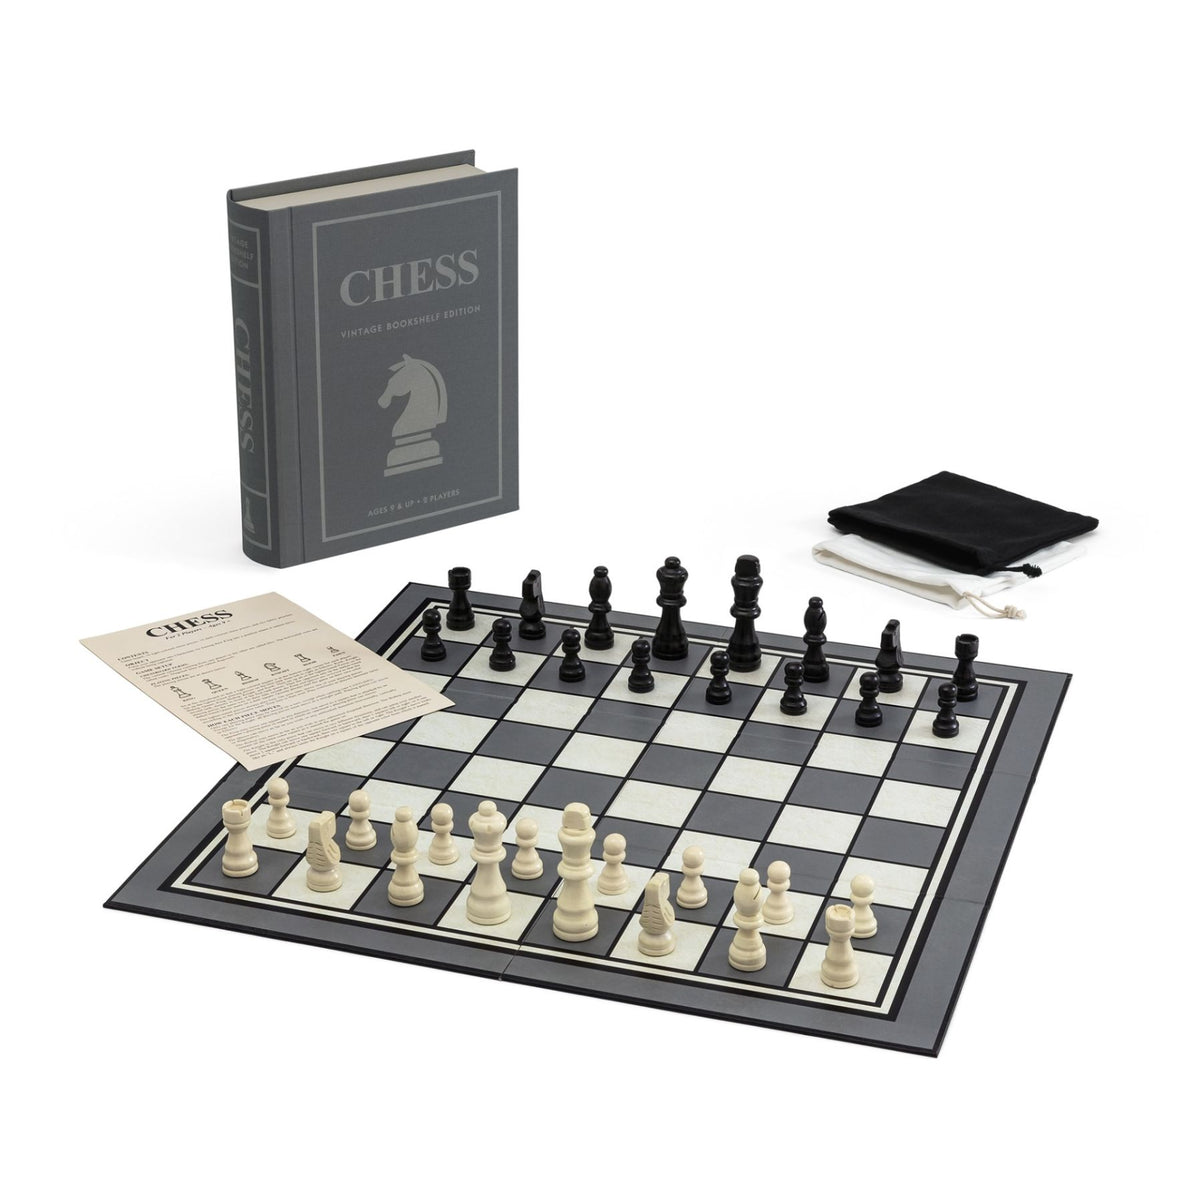 Vintage Bookshelf Edition | Chess | WS Game Company